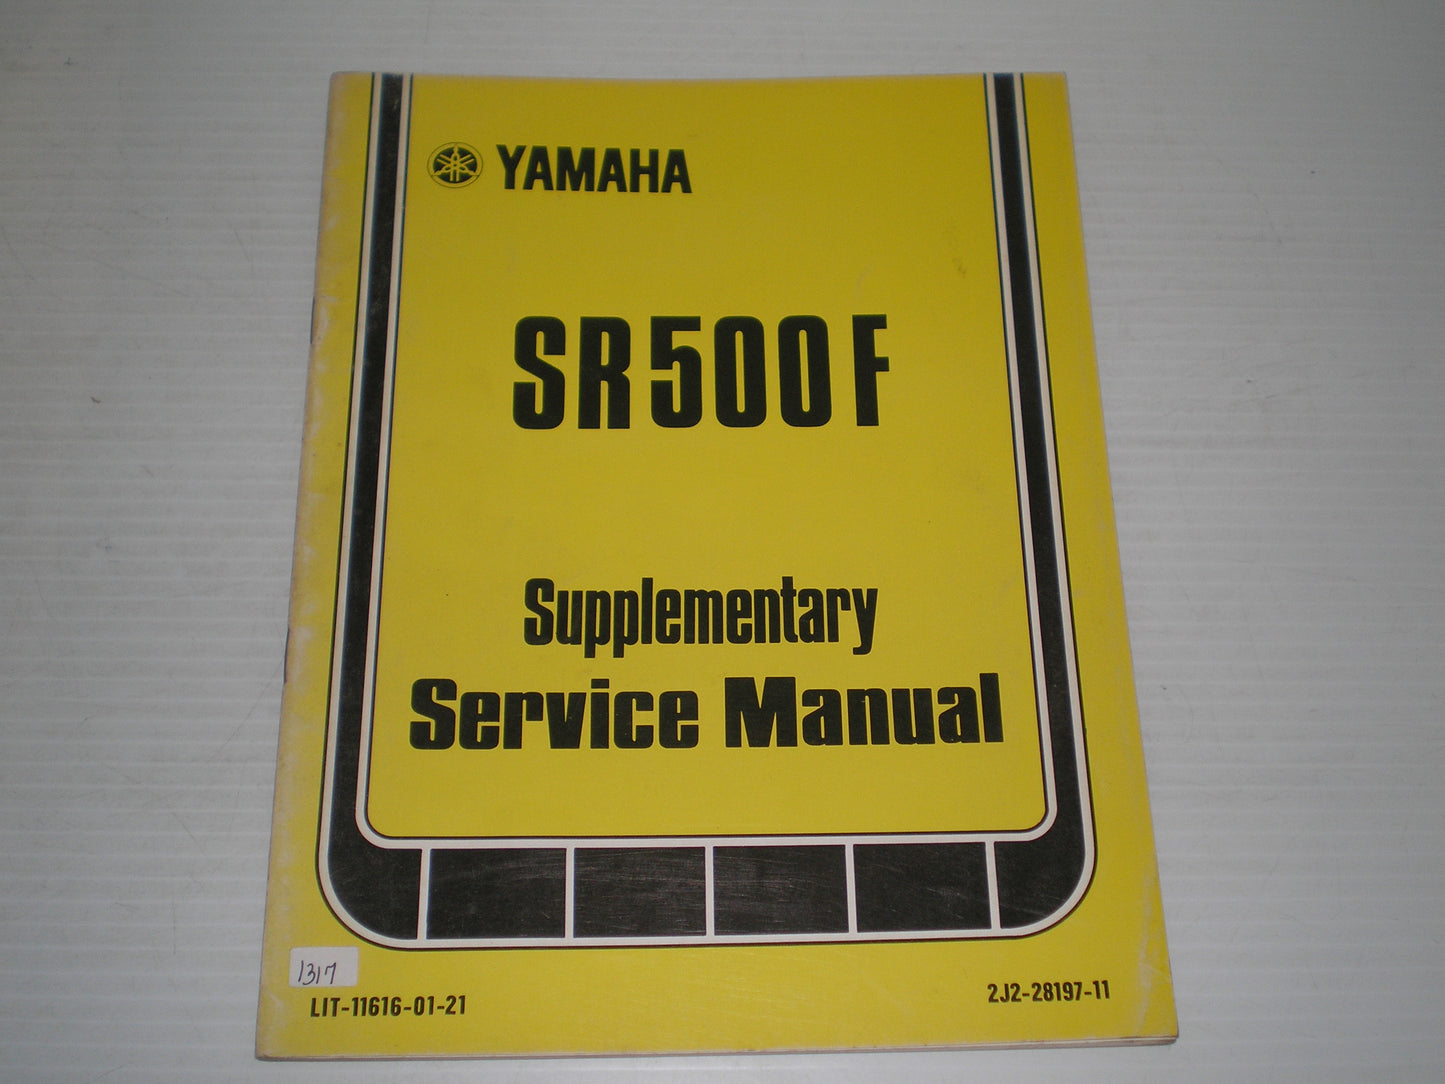 YAMAHA SR500 F  SR500F  1979  Service Manual Supplement  2J2-28197-11  LIT-11616-01-21  #1317